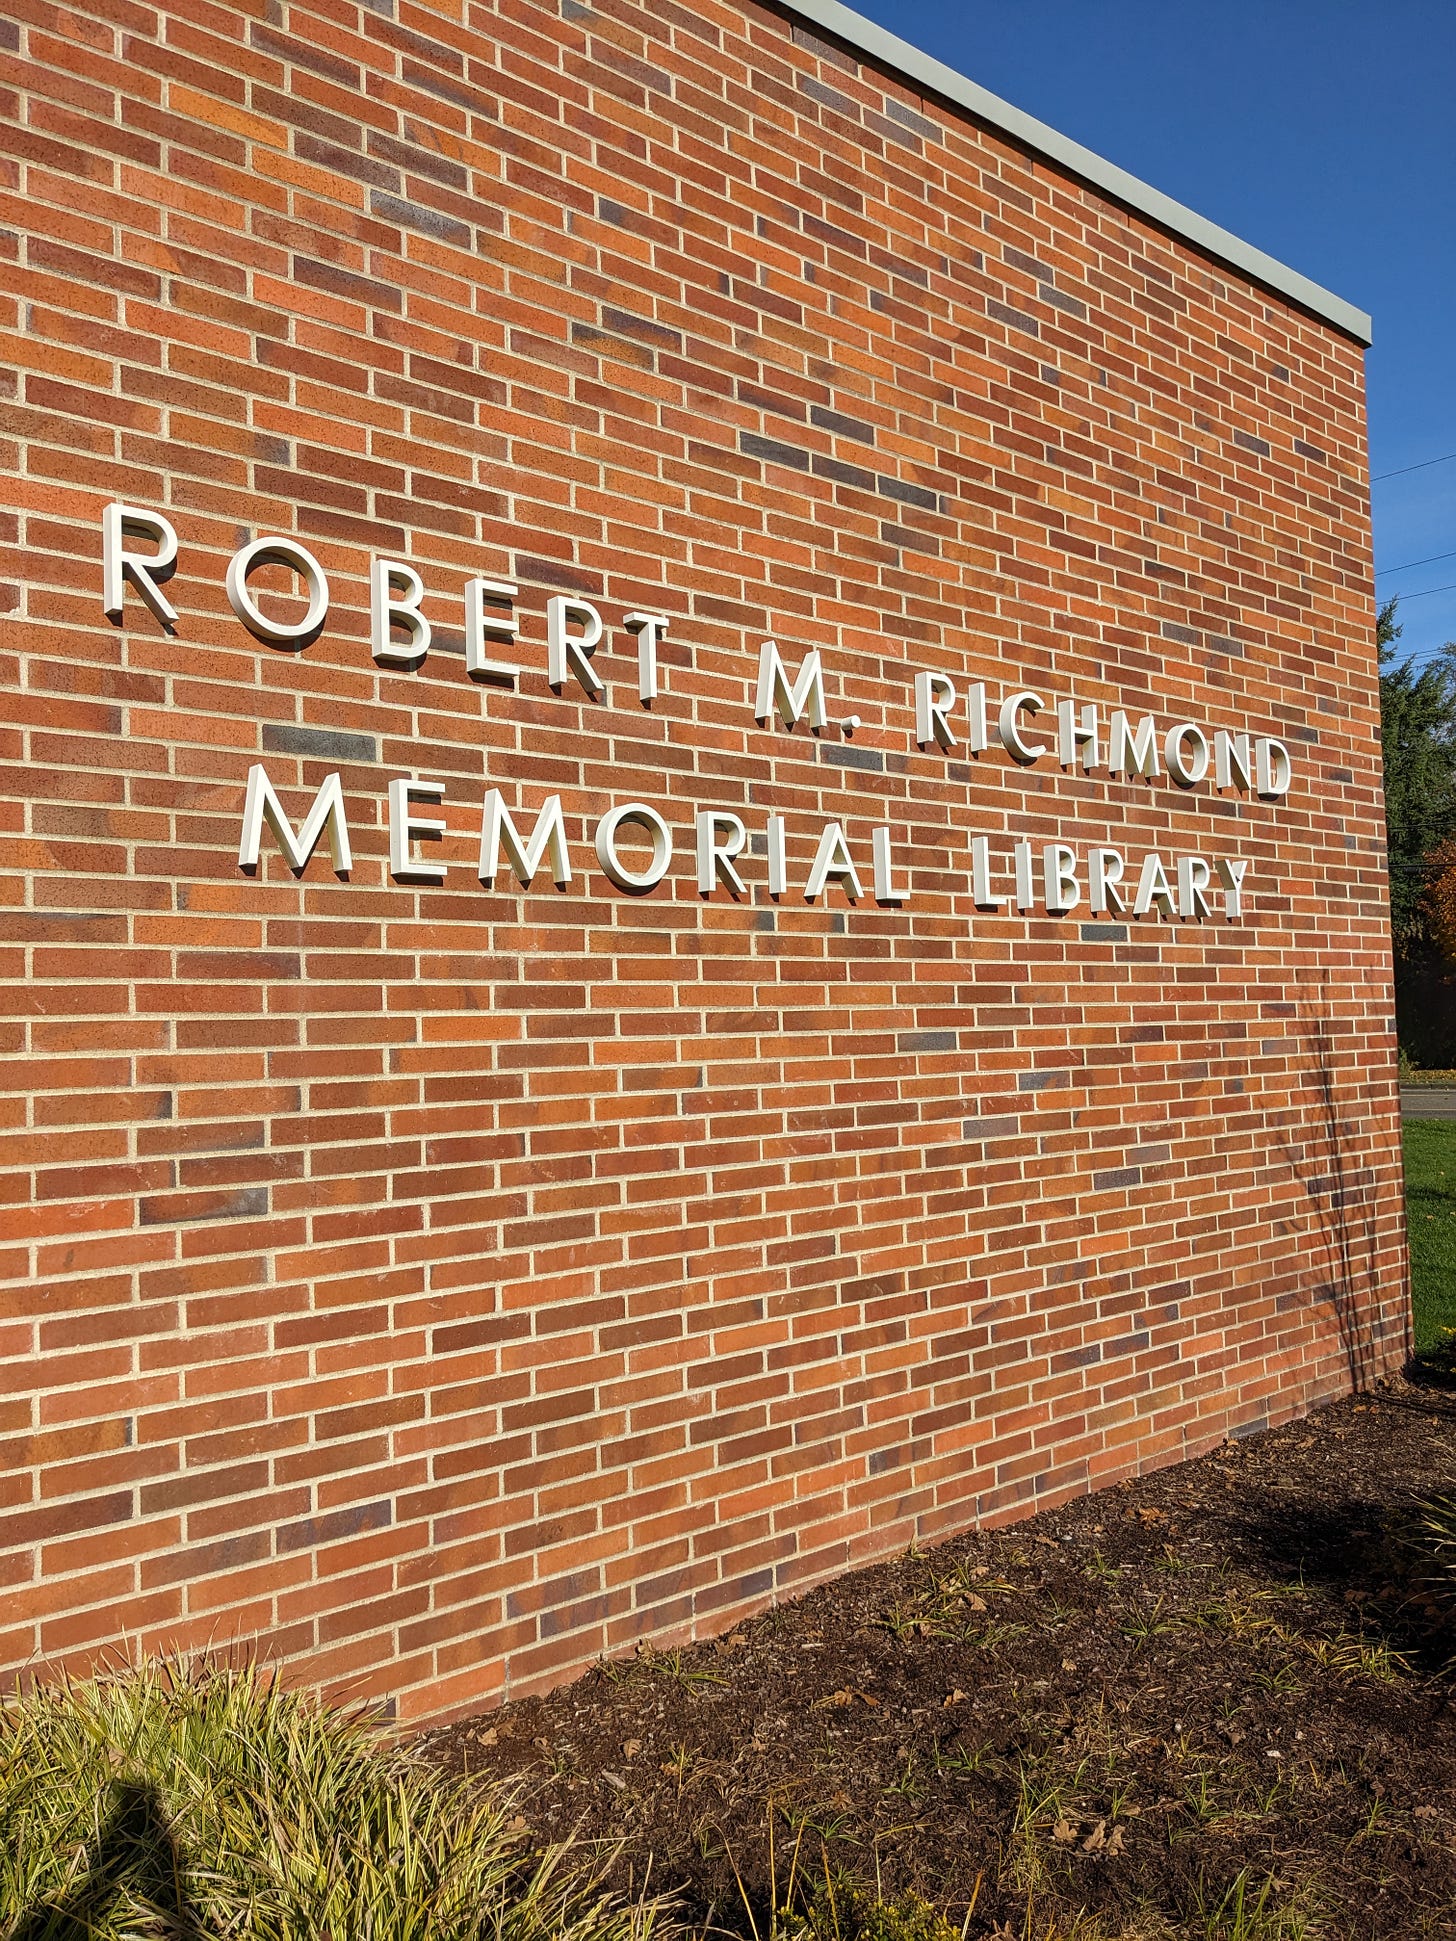 Robert M. Richmond Memorial Library, Forest Grove Oregon